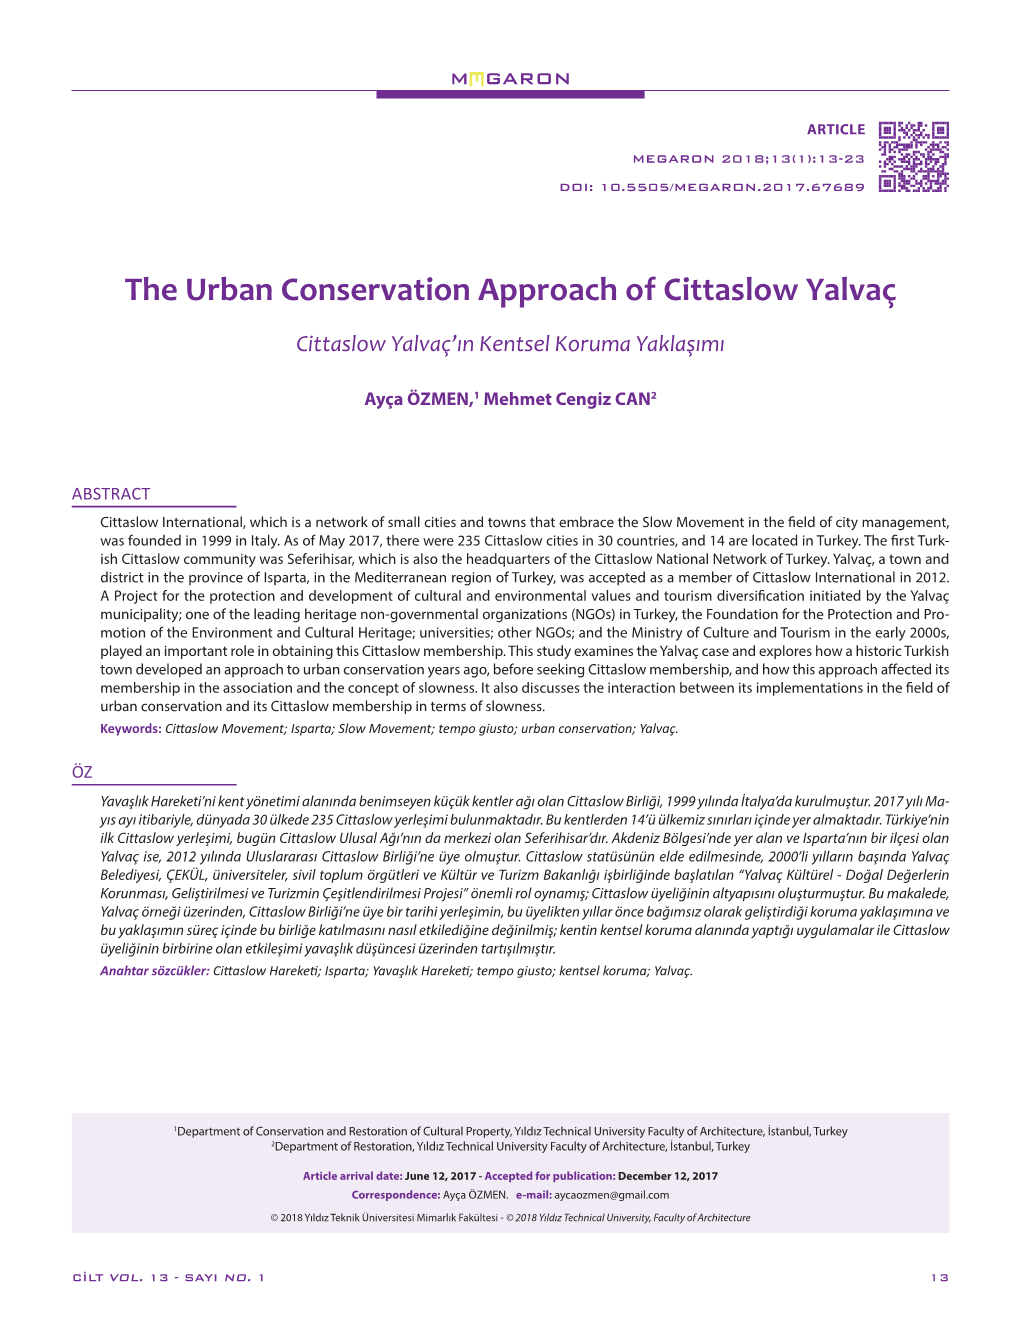 The Urban Conservation Approach of Cittaslow Yalvaç